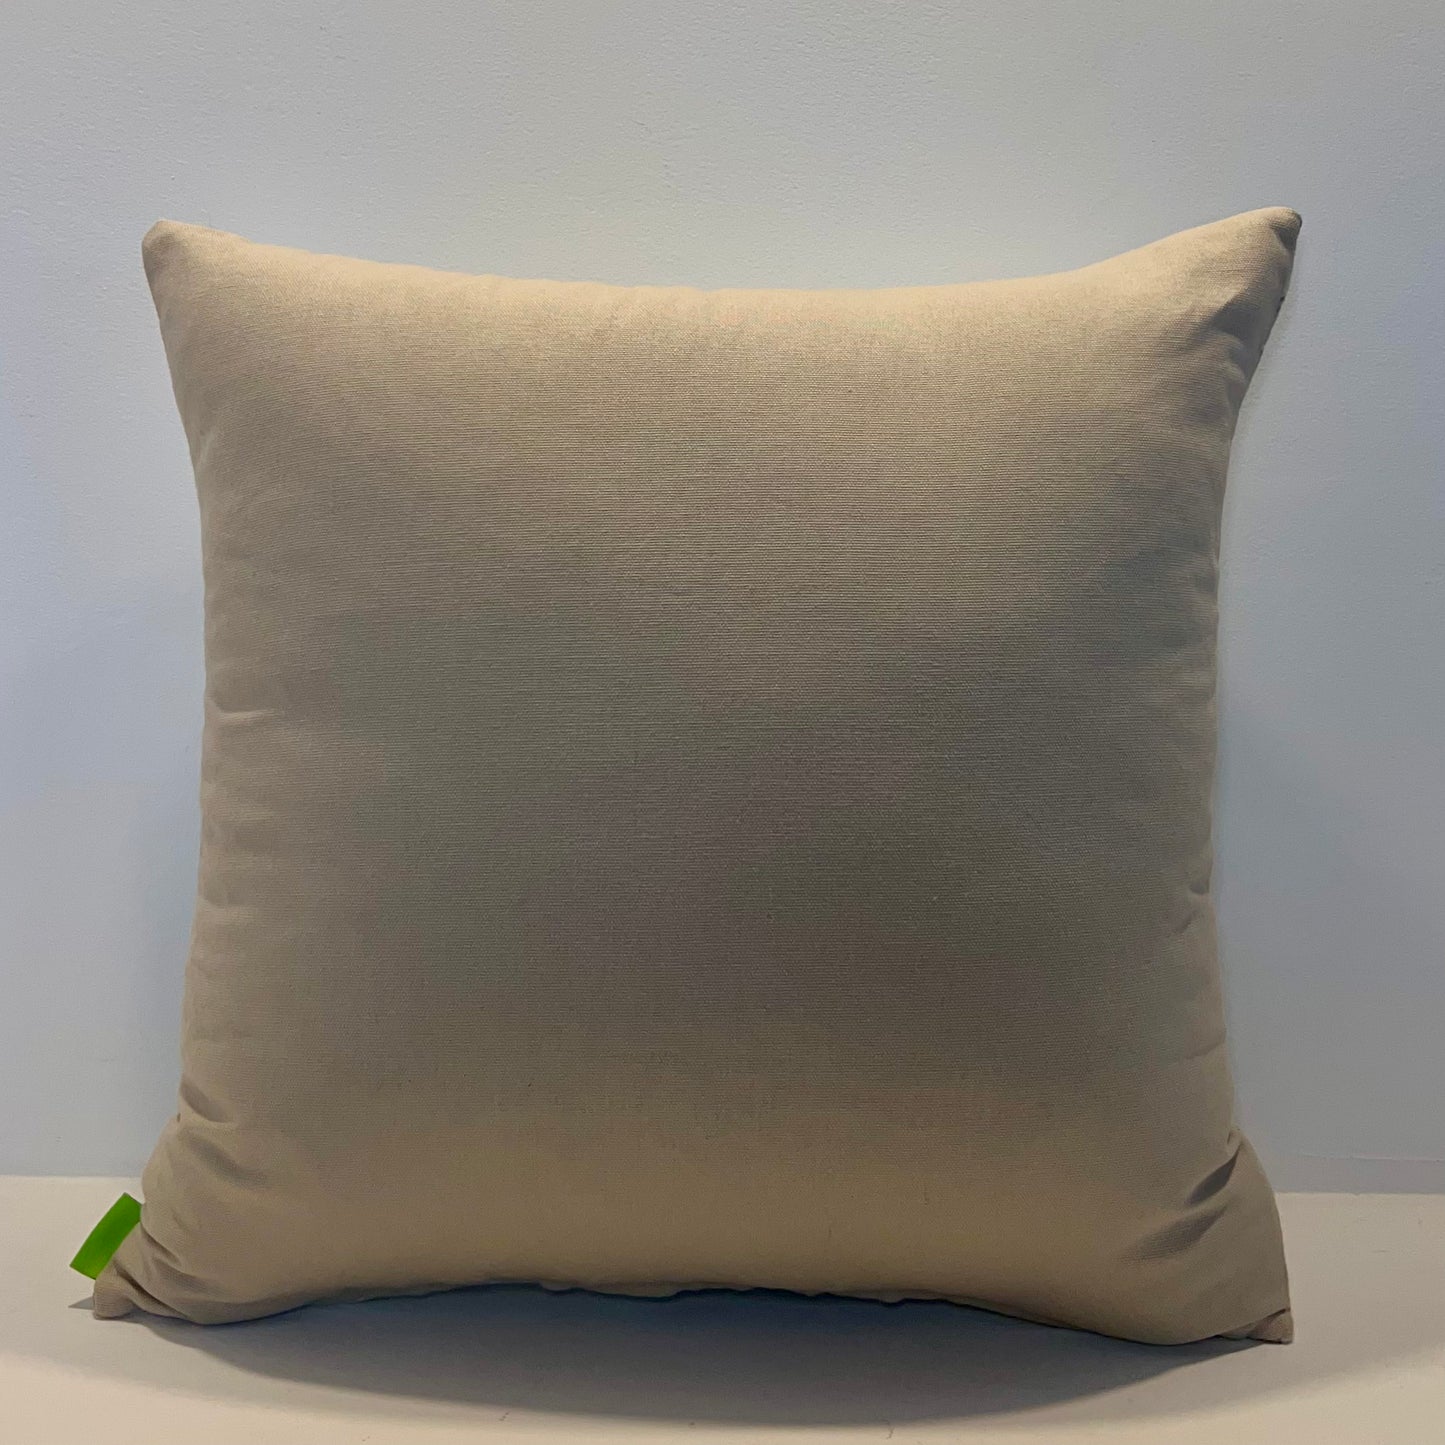 Green Flower Field - Cushion Cover - 45cm x 45cm